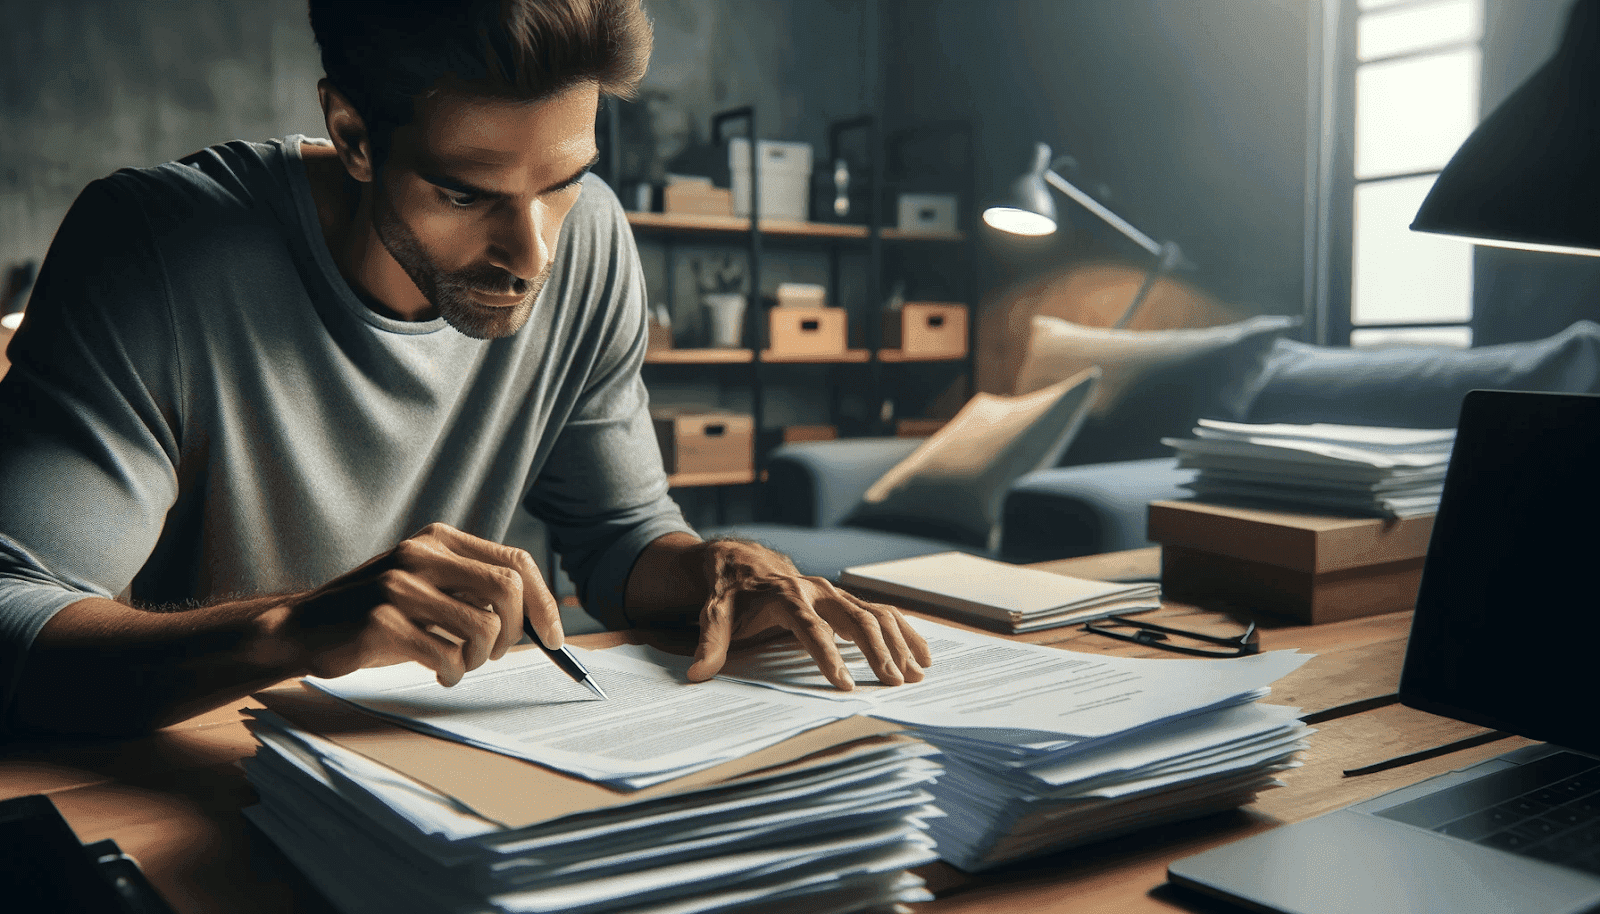 Guy studying documents